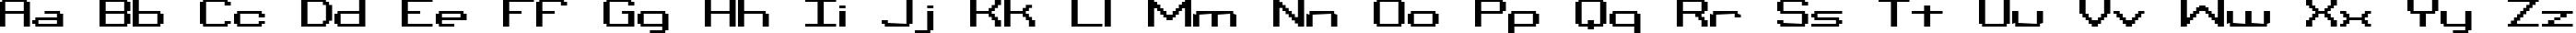 Пример написания английского алфавита шрифтом Binary CHR BRK